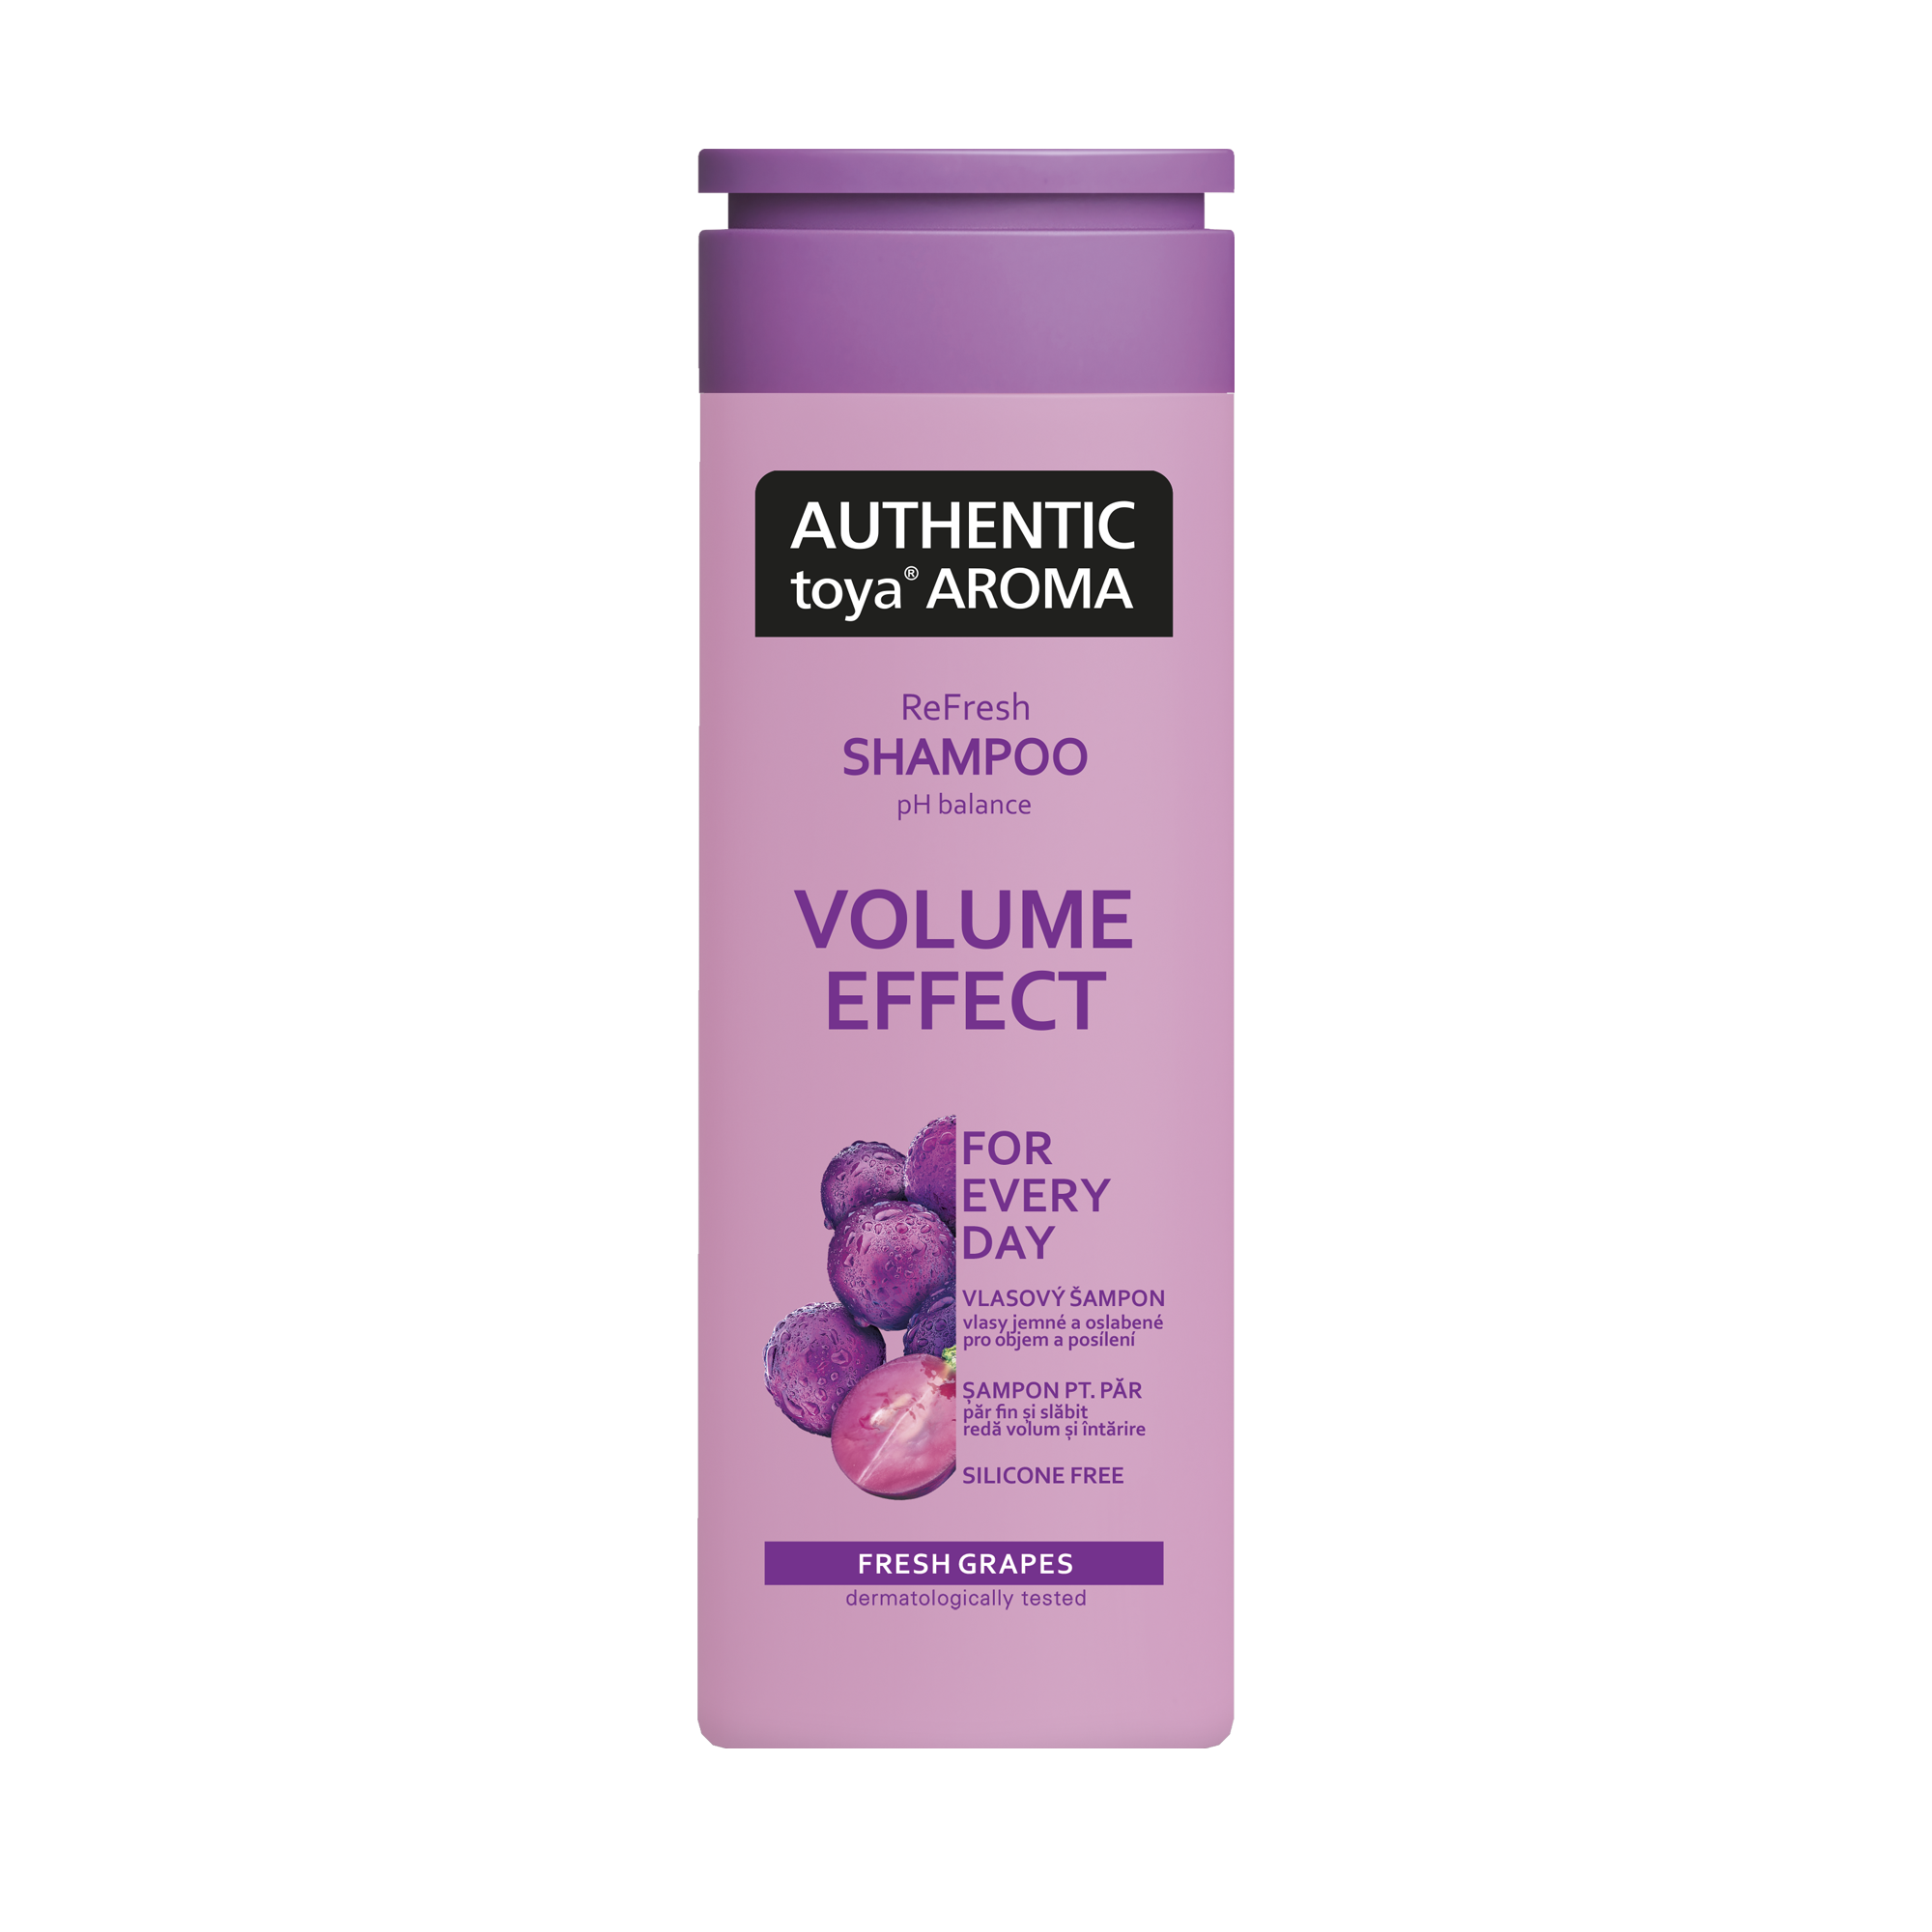 AUTHENTIC toya AROMA vlasový šampon Volume Effect